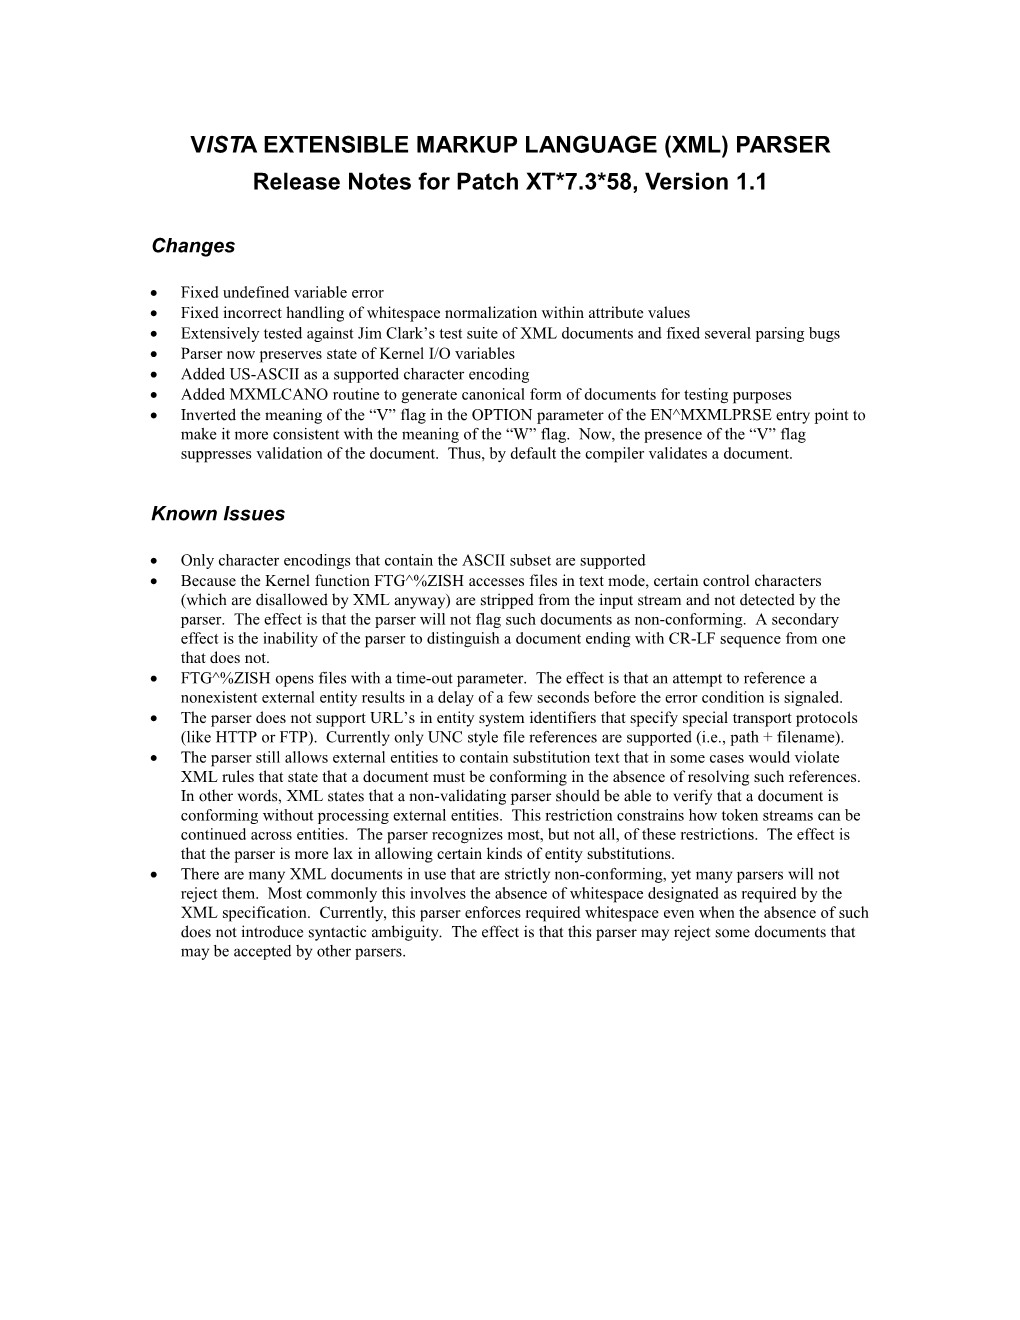 Release Notes for M XML Parser Version 1